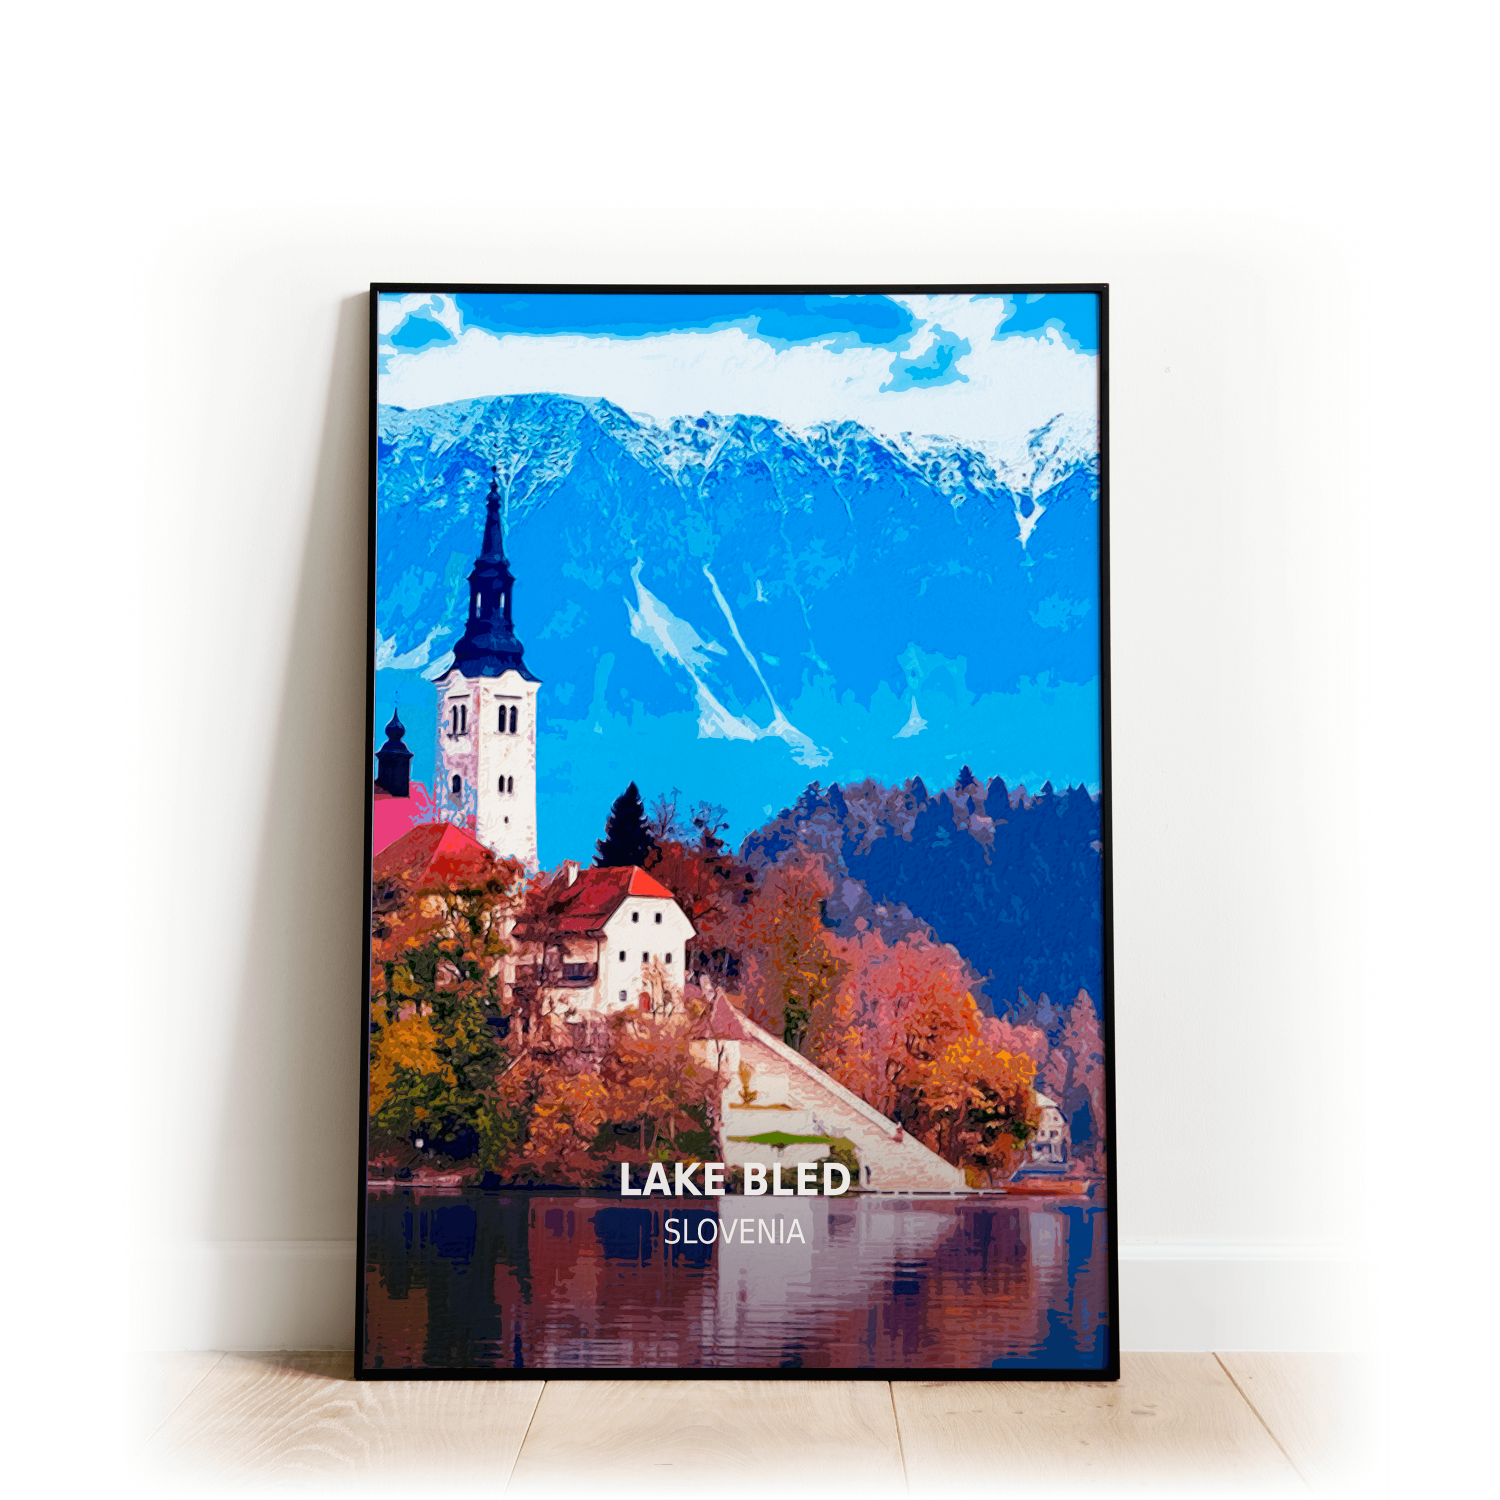 Lake Bled - Slovenia - Print - A4 - Standard - Print Only